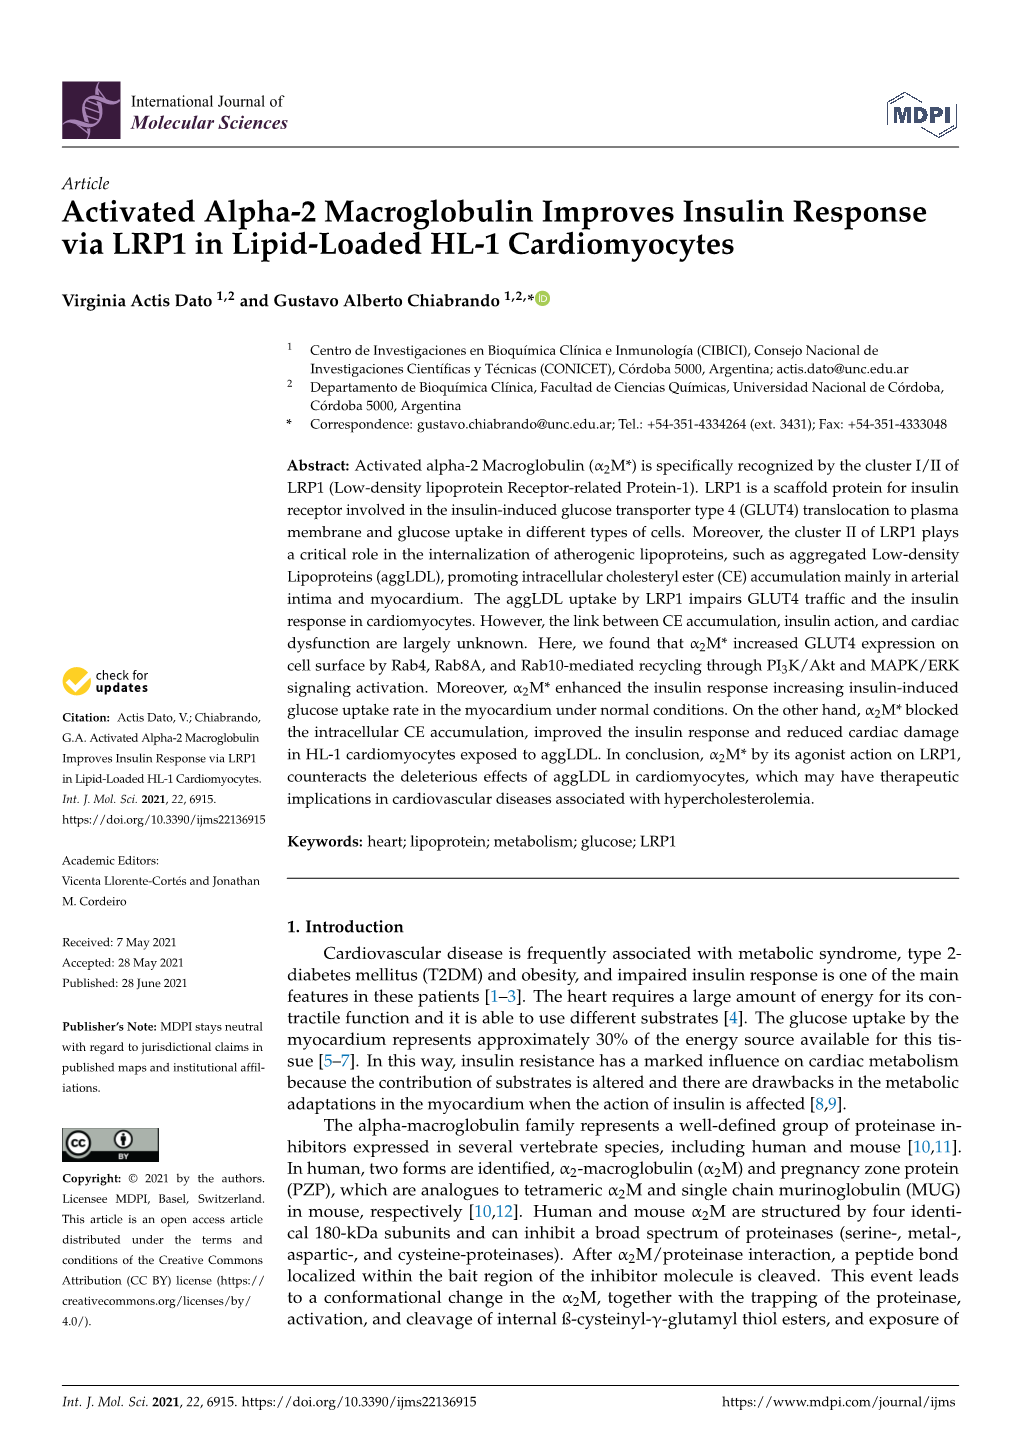 Activated Alpha-2 Macroglobulin Improves Insulin Response Via LRP1 in Lipid-Loaded HL-1 Cardiomyocytes